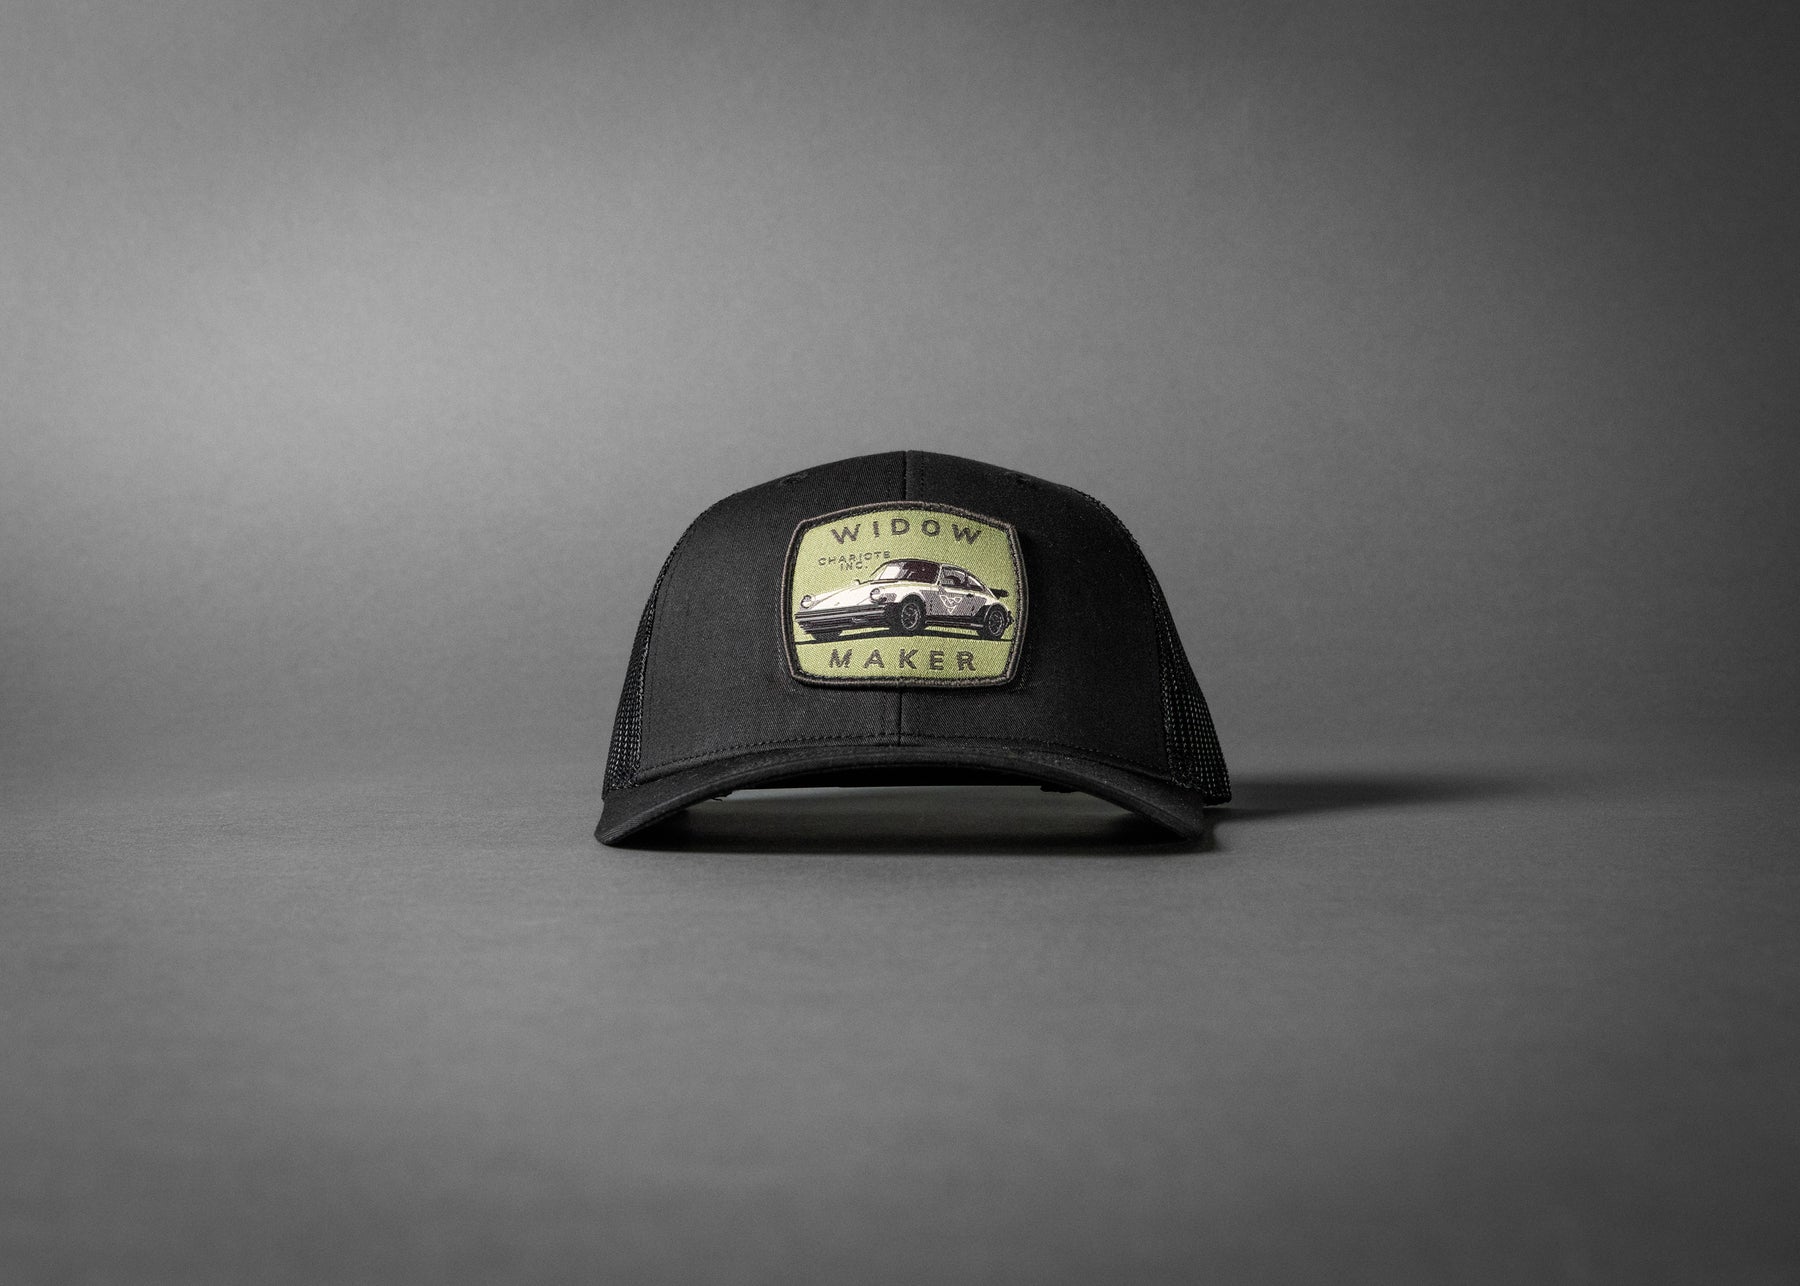 WIDOWMAKER (Black Premium Trucker Hat)